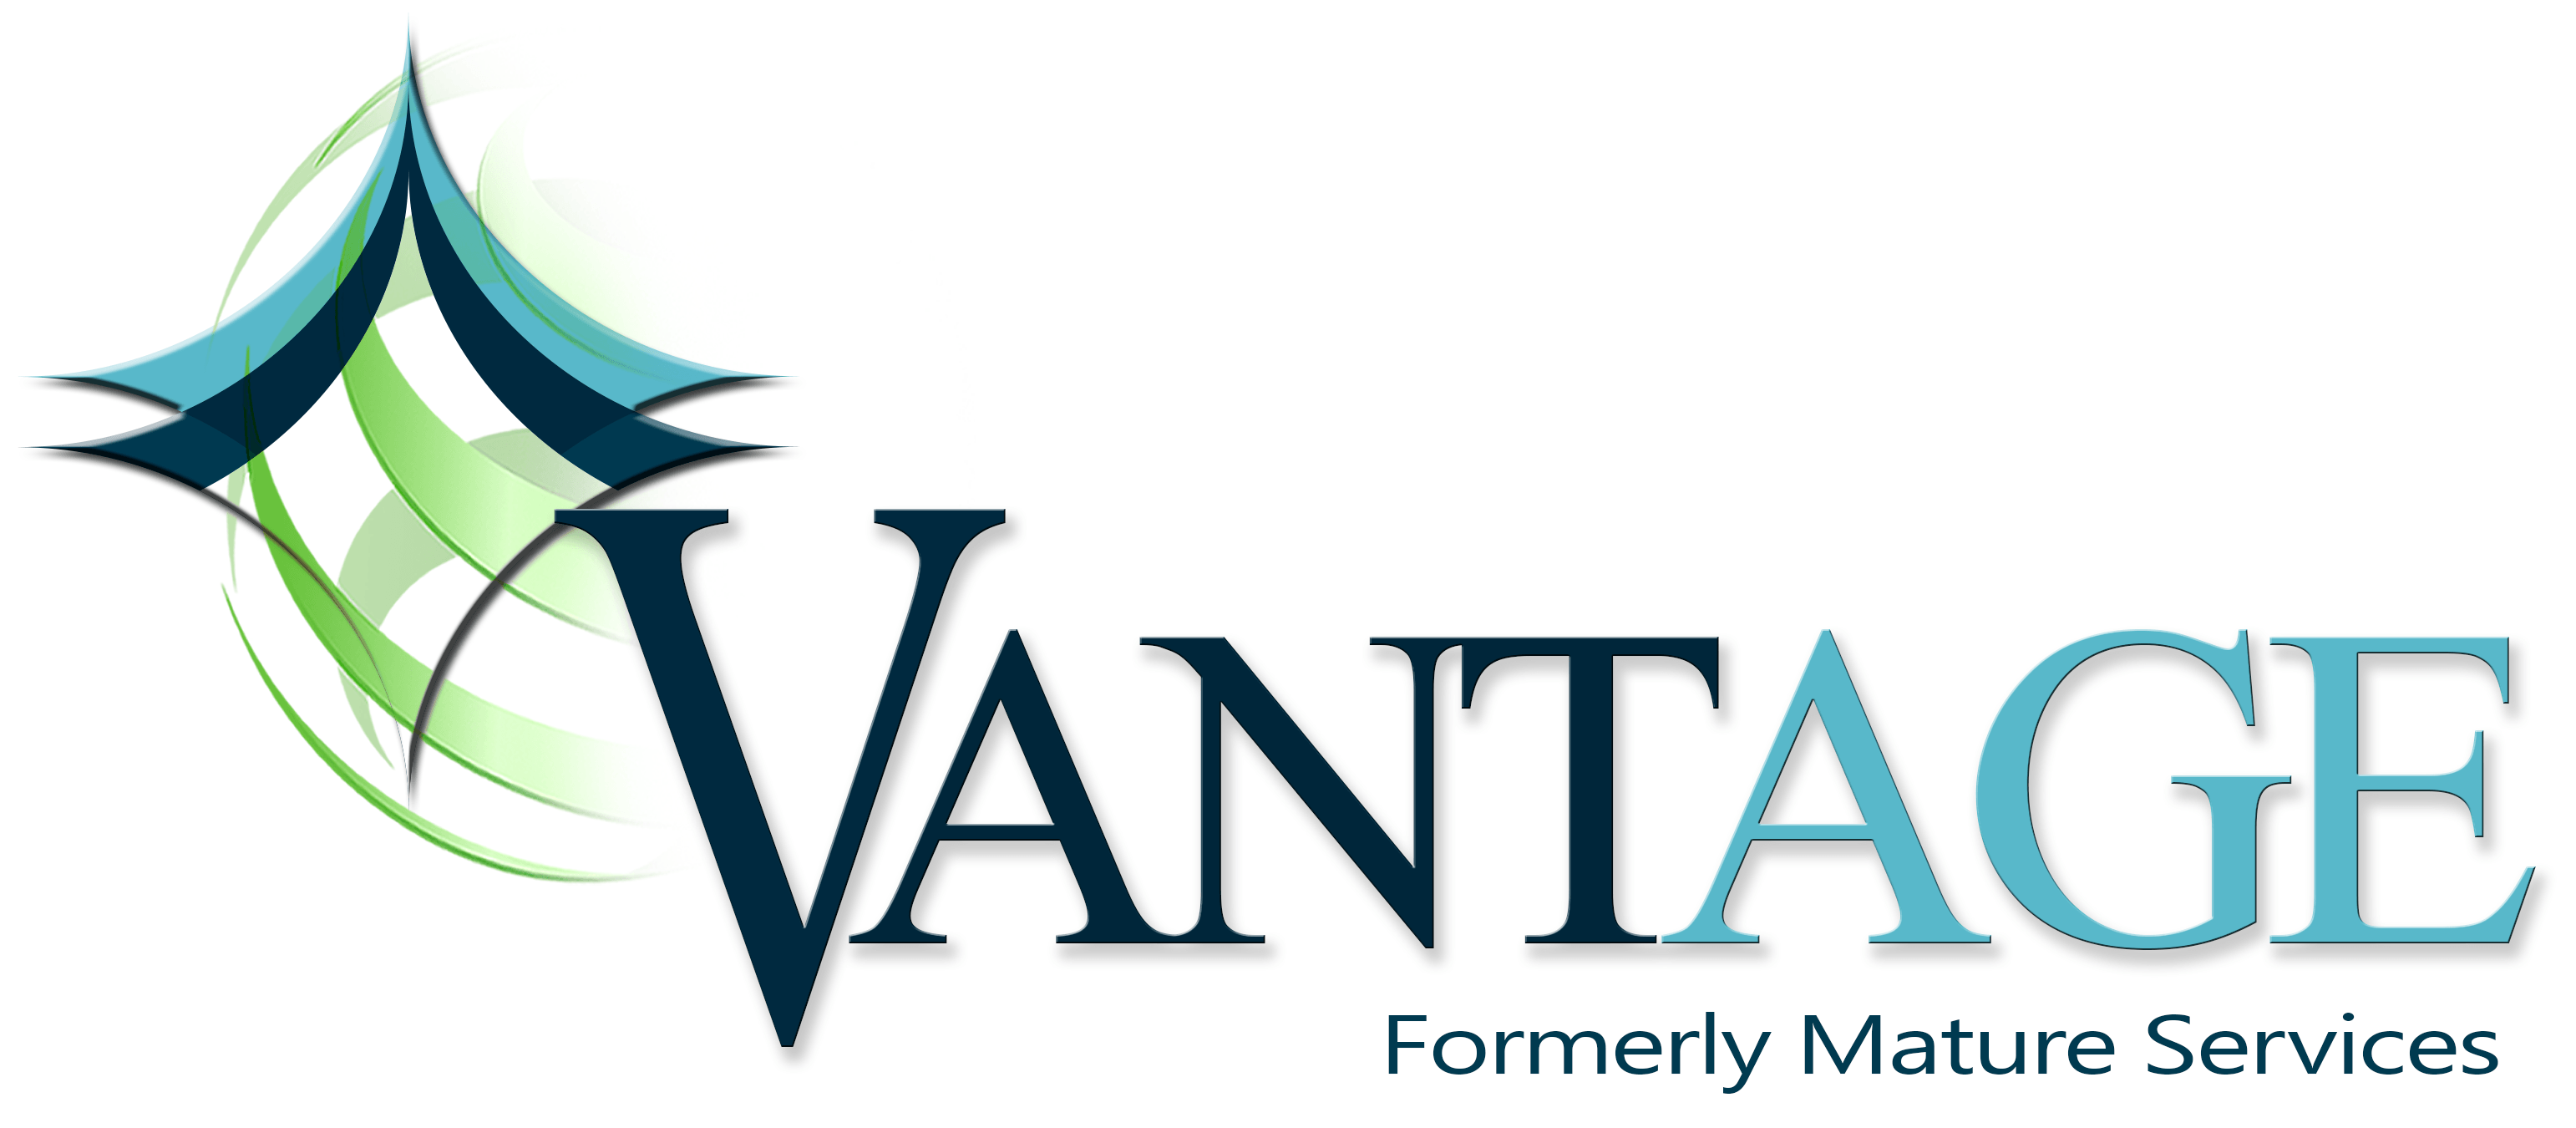 Vantage Logo - Vantage Master Logo Formerly Mature Services 11 21 2017